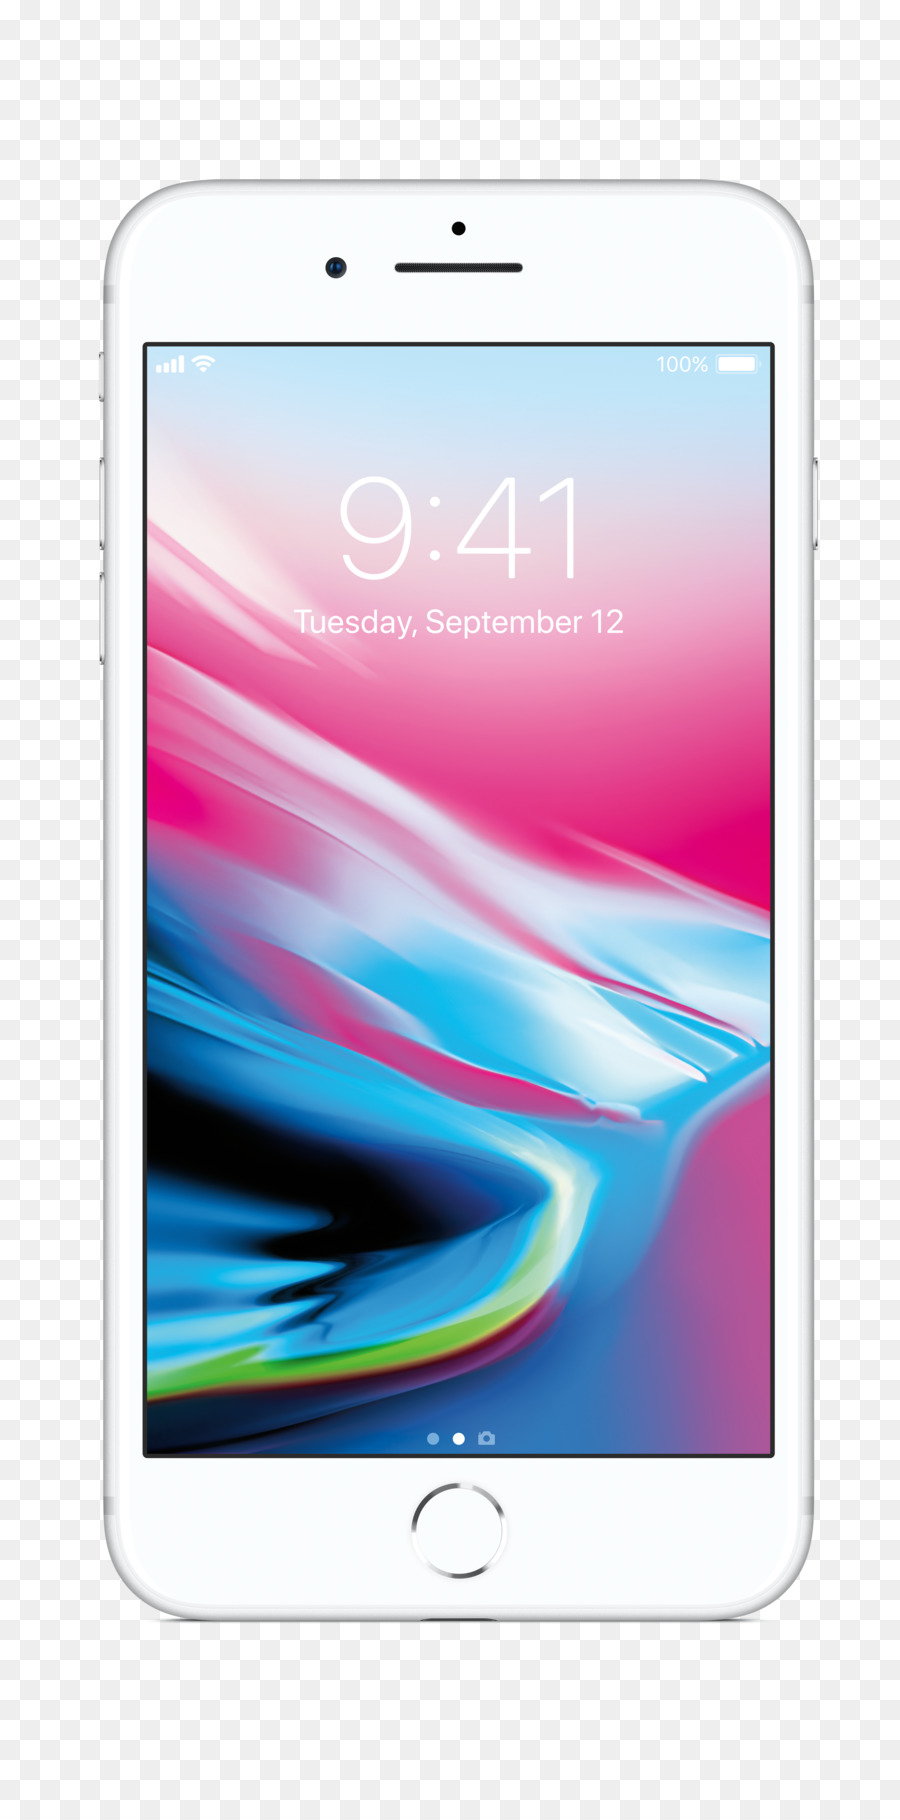 iPhone X Telefono Smartphone di Apple 4G - mela 8plus